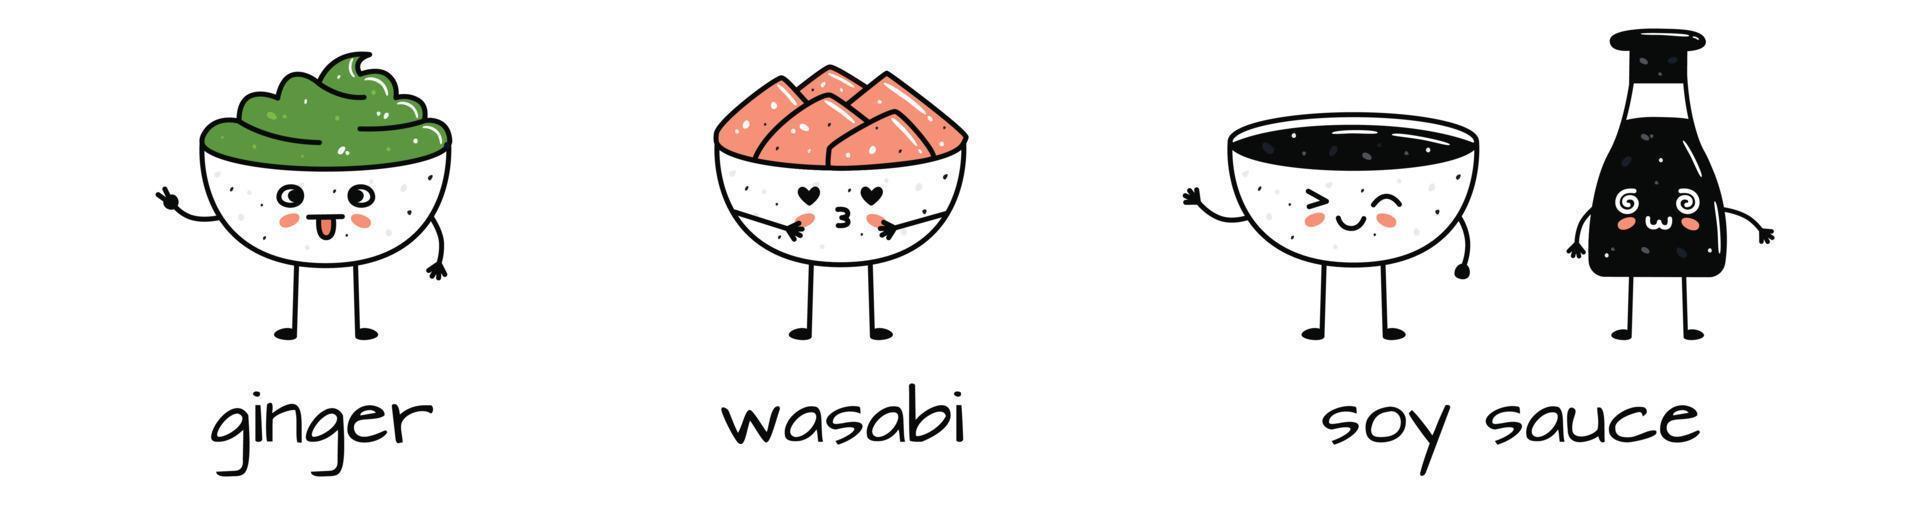 conjunto do kawaii soja molho garrafa, gengibre e wasabi taças mascotes dentro desenho animado estilo vetor